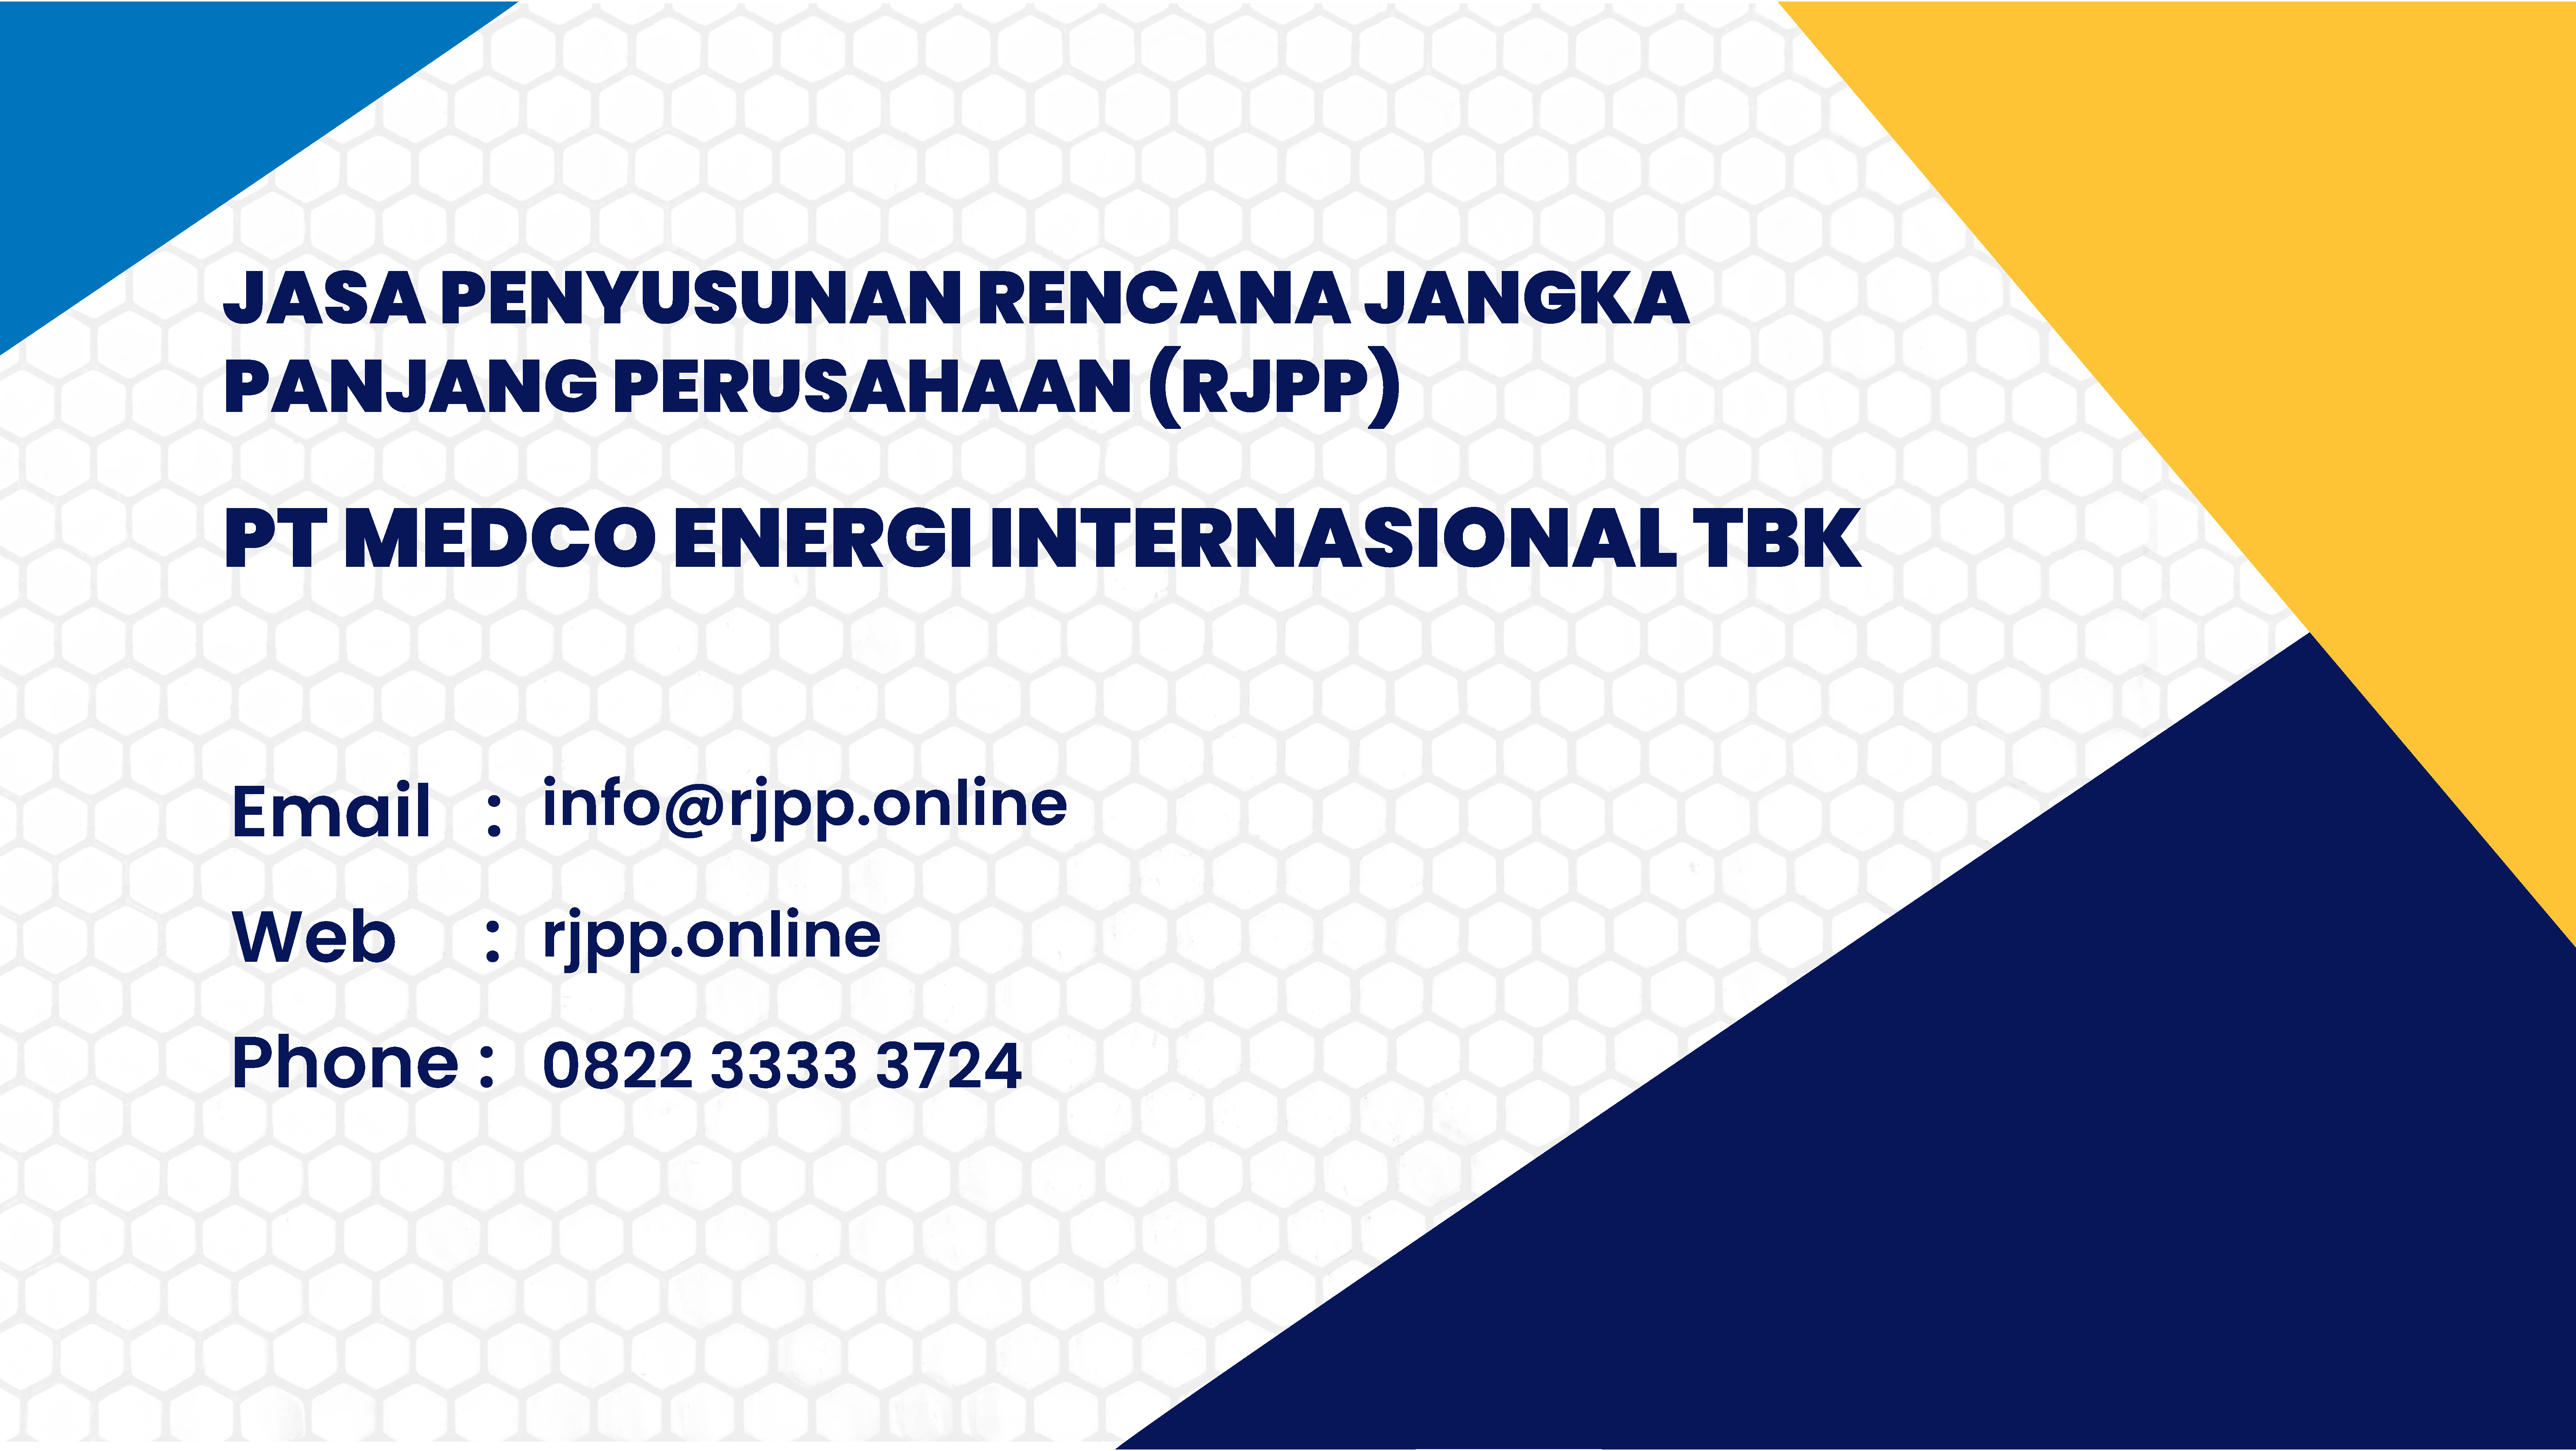 RJPP Medco Energi Internasional